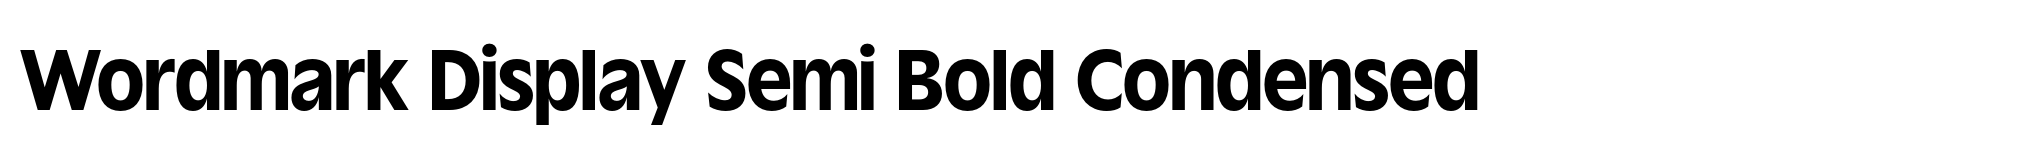 Wordmark Display Semi Bold Condensed image